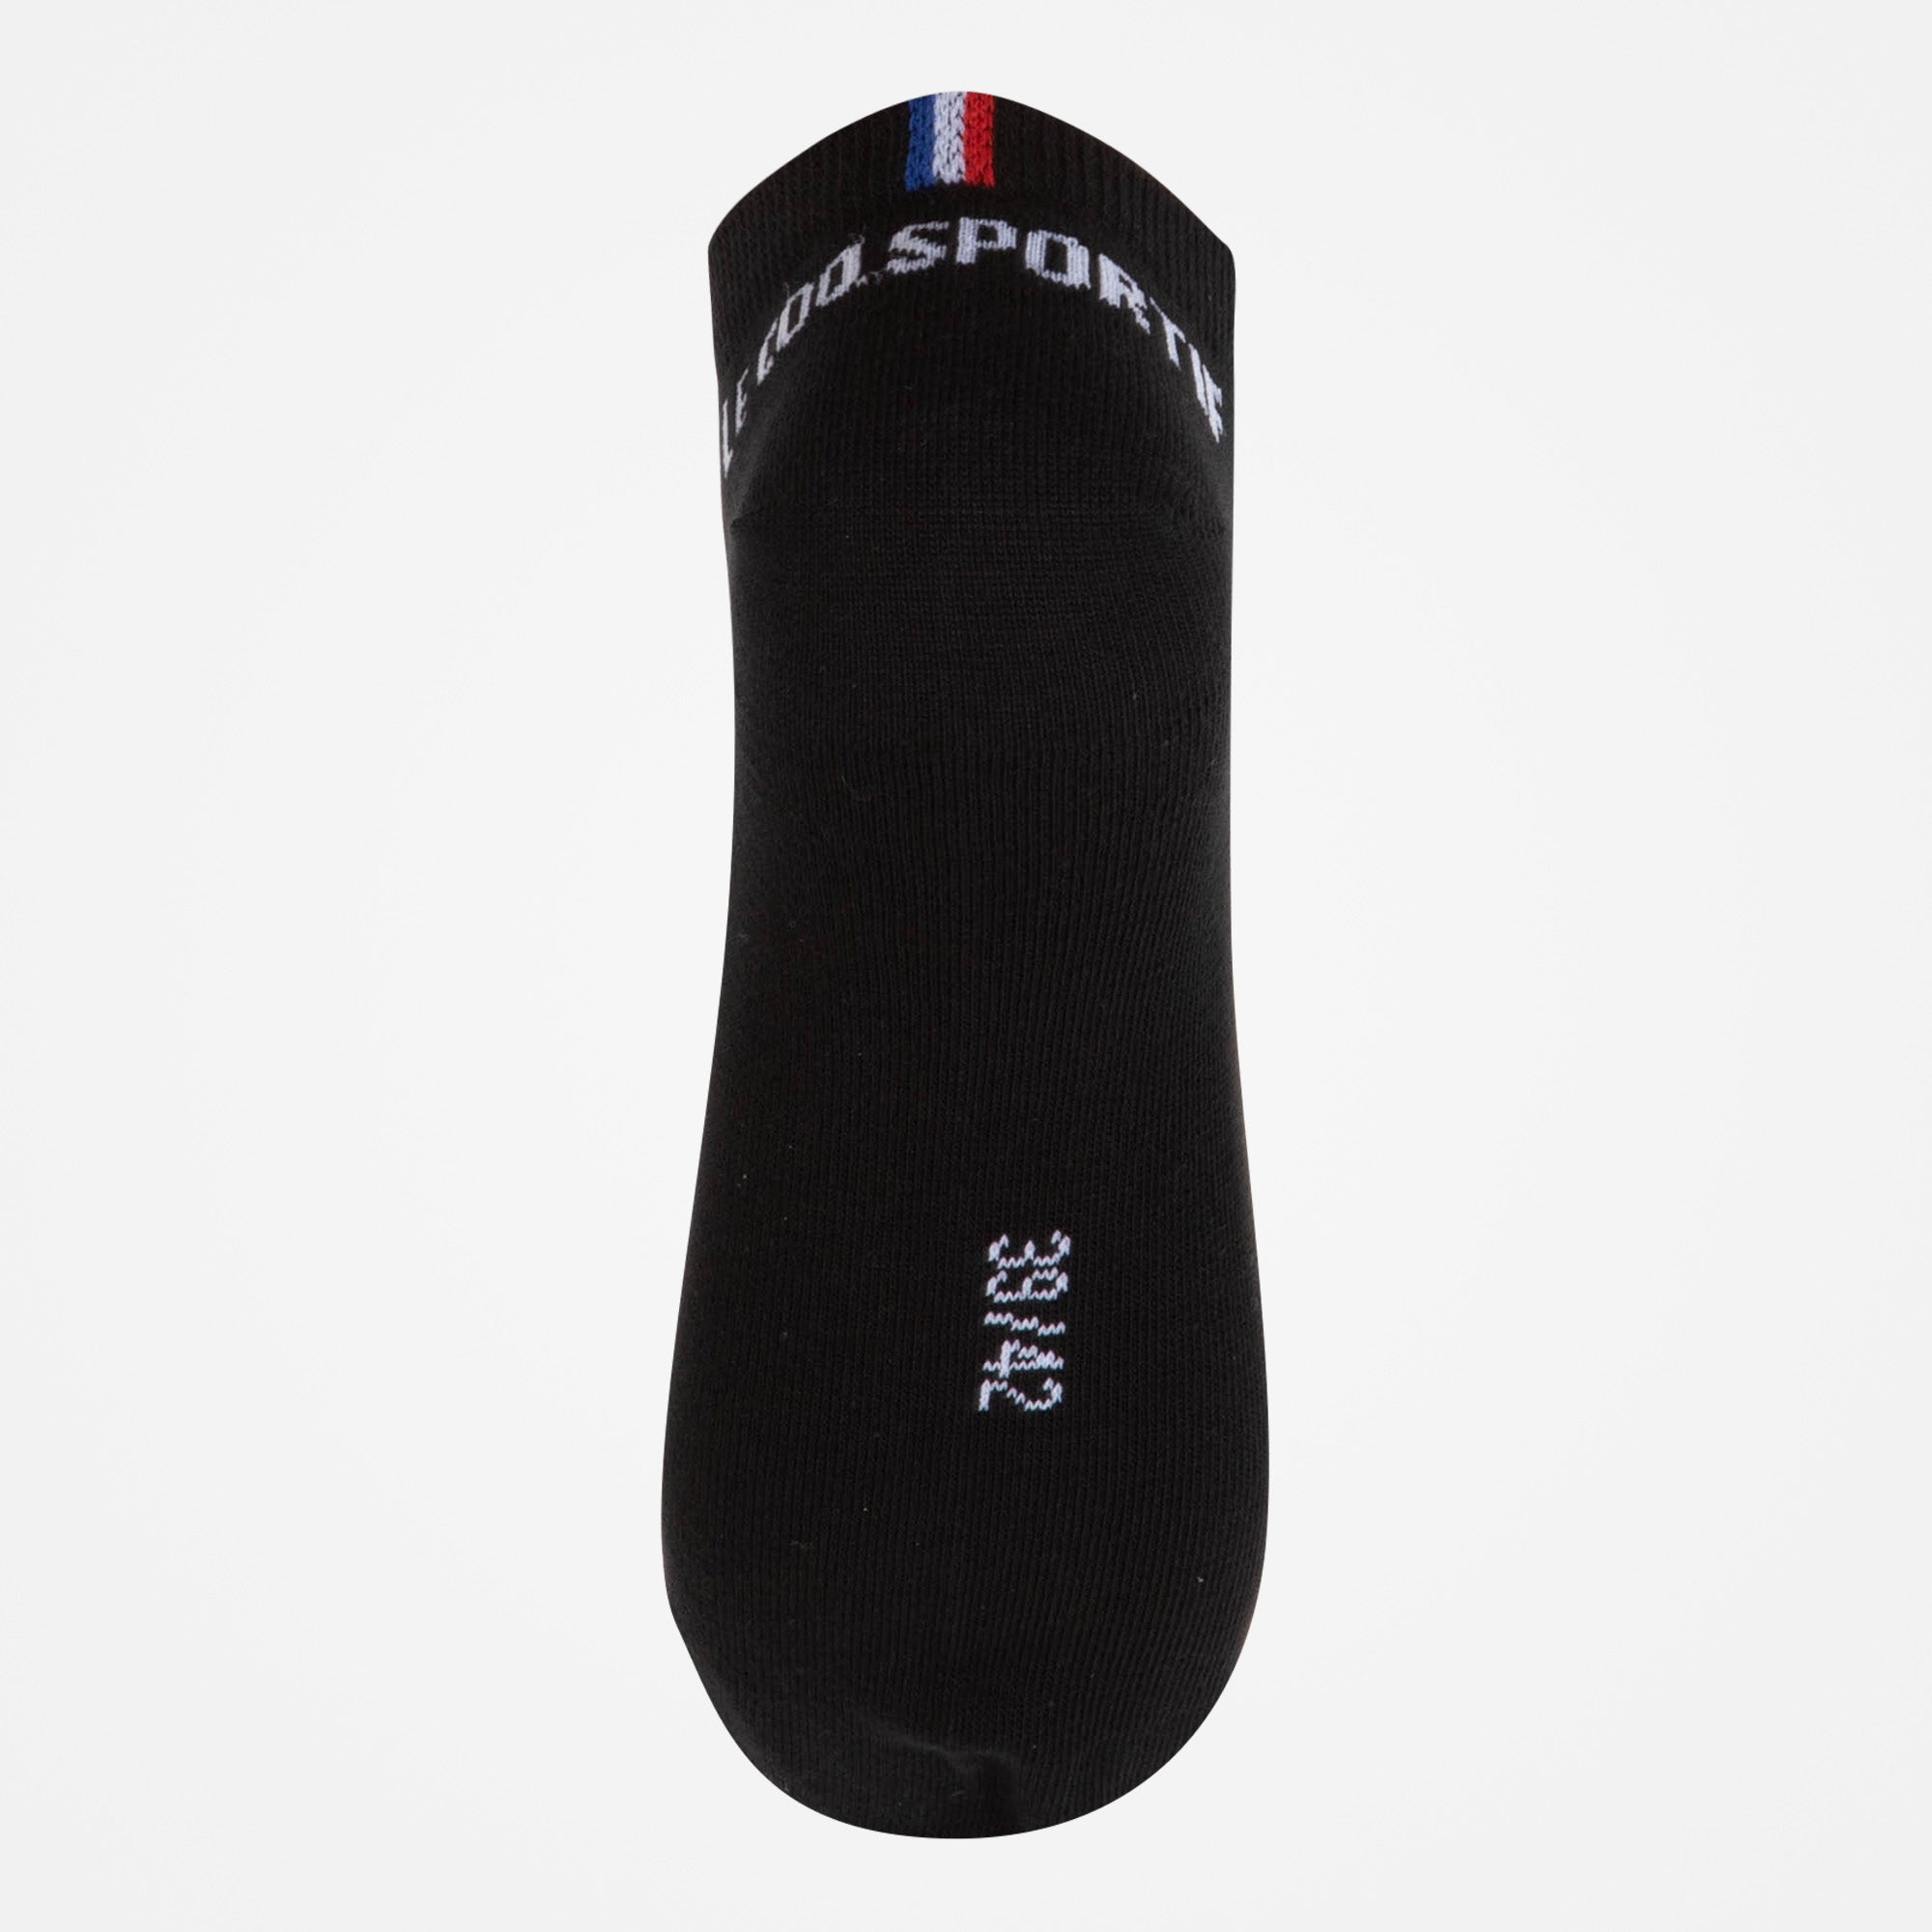 2210753-ESS Chaussettes Basse X2 N°1 black  | Socks Unisex